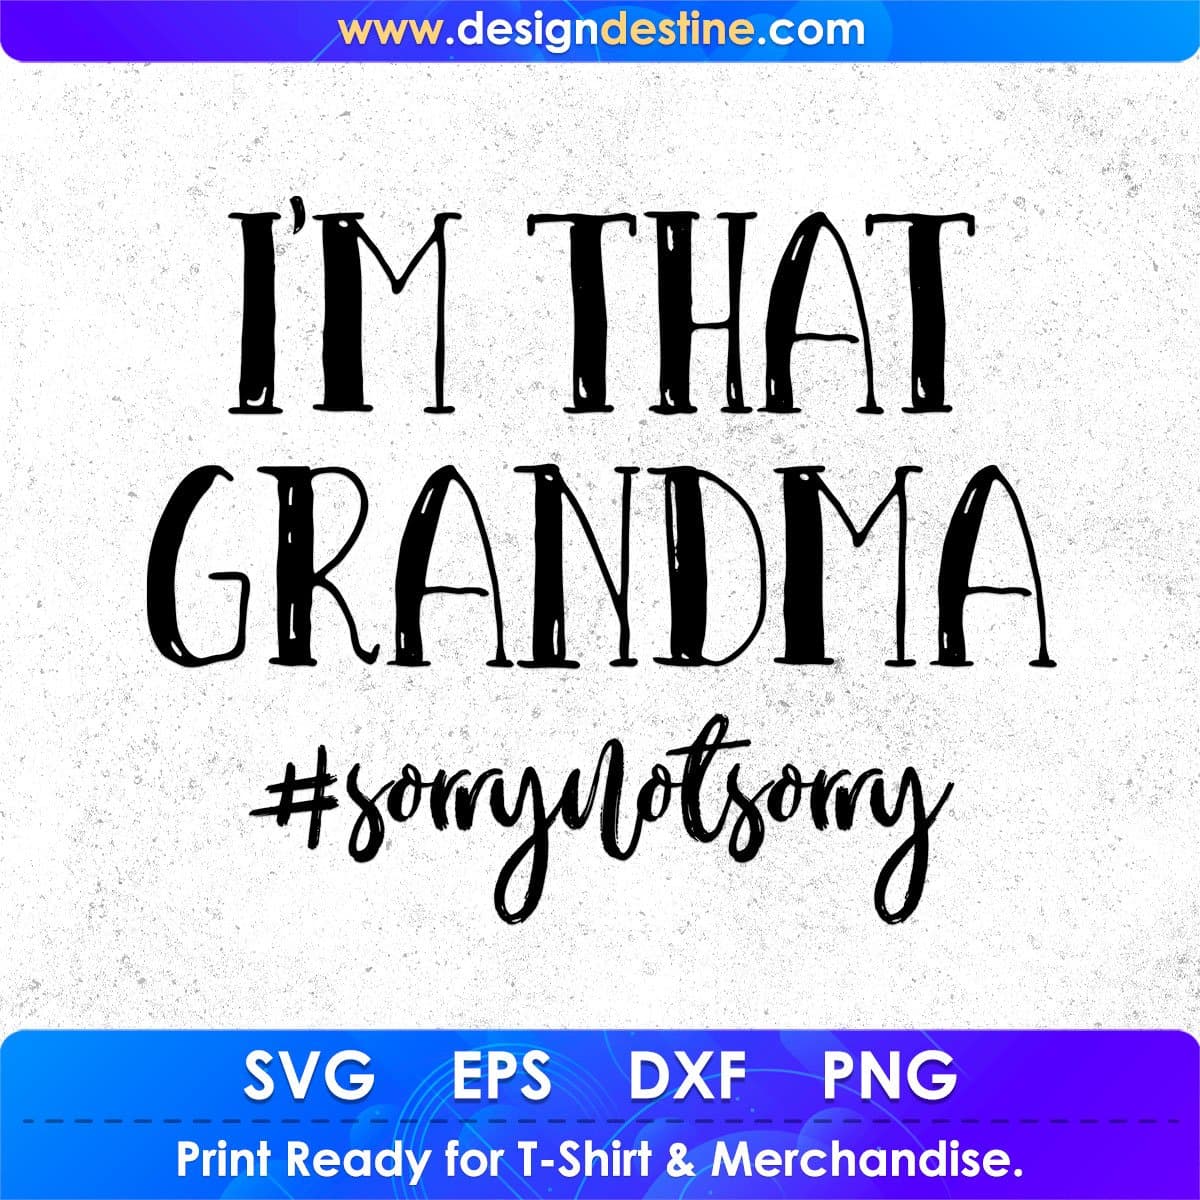 I'm That Grandma T shirt Design In Png Svg Cutting Printable Files